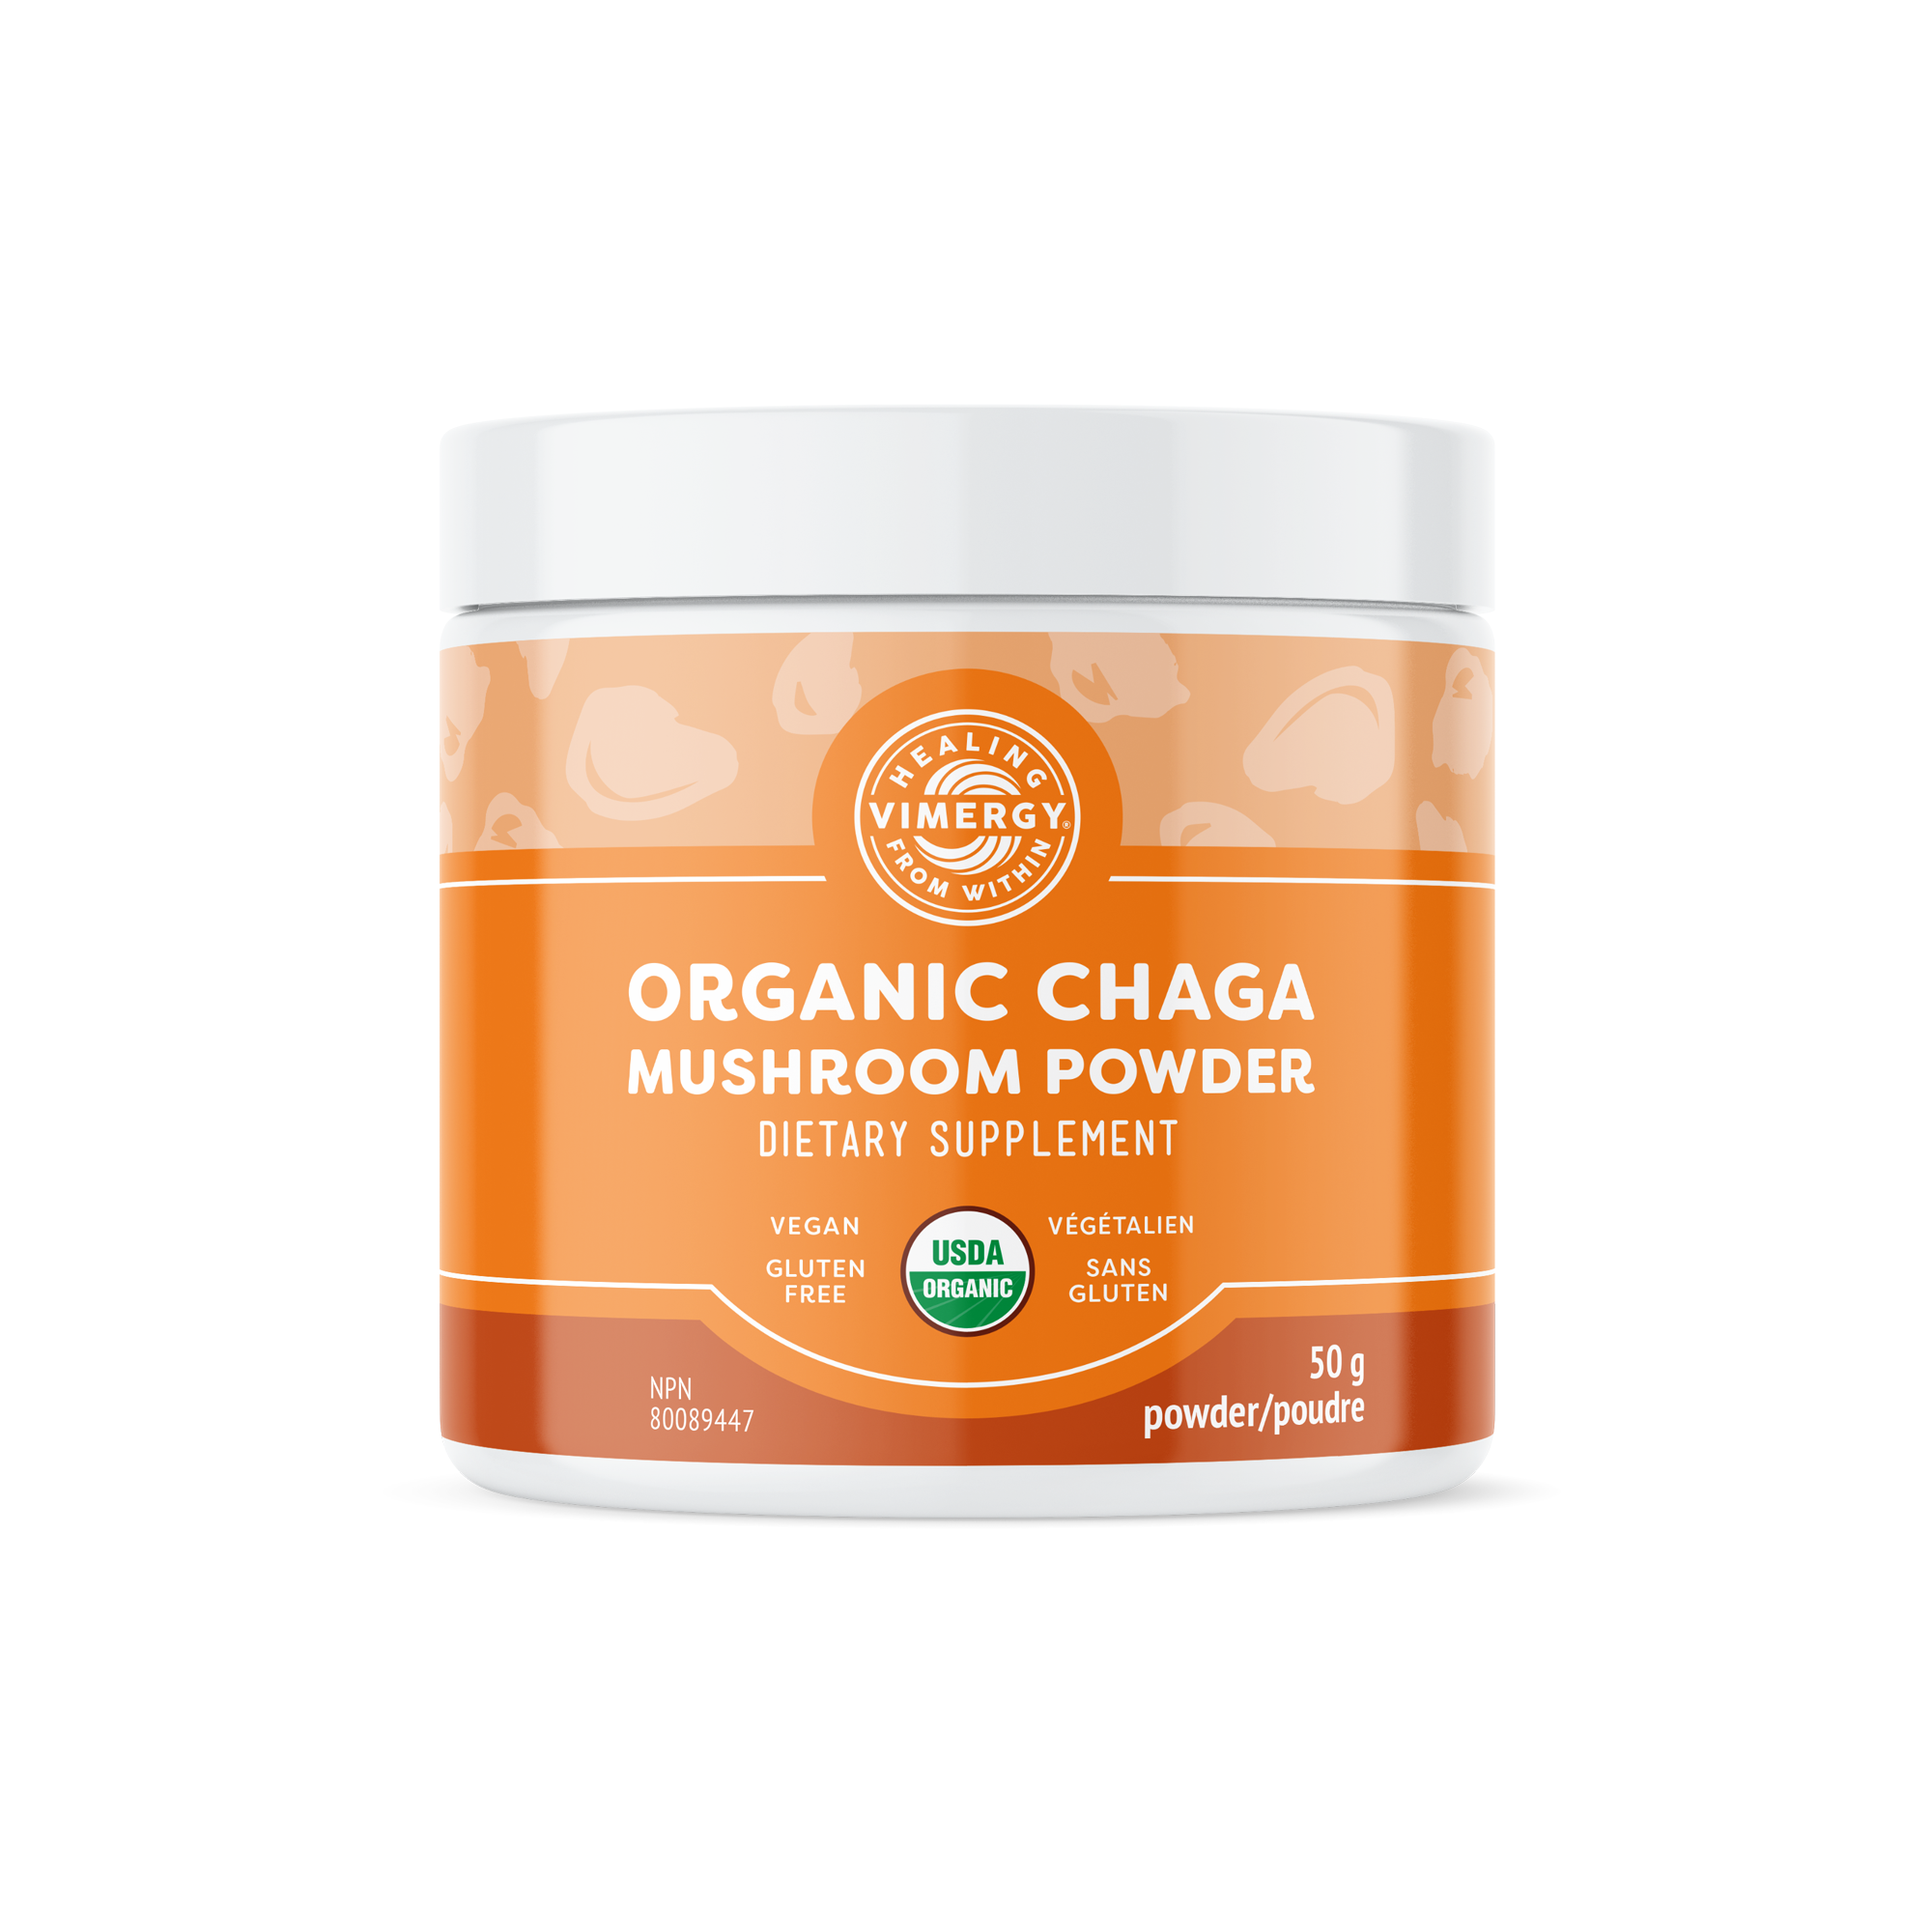 Vimergy Organic Chaga Mushroom Powder